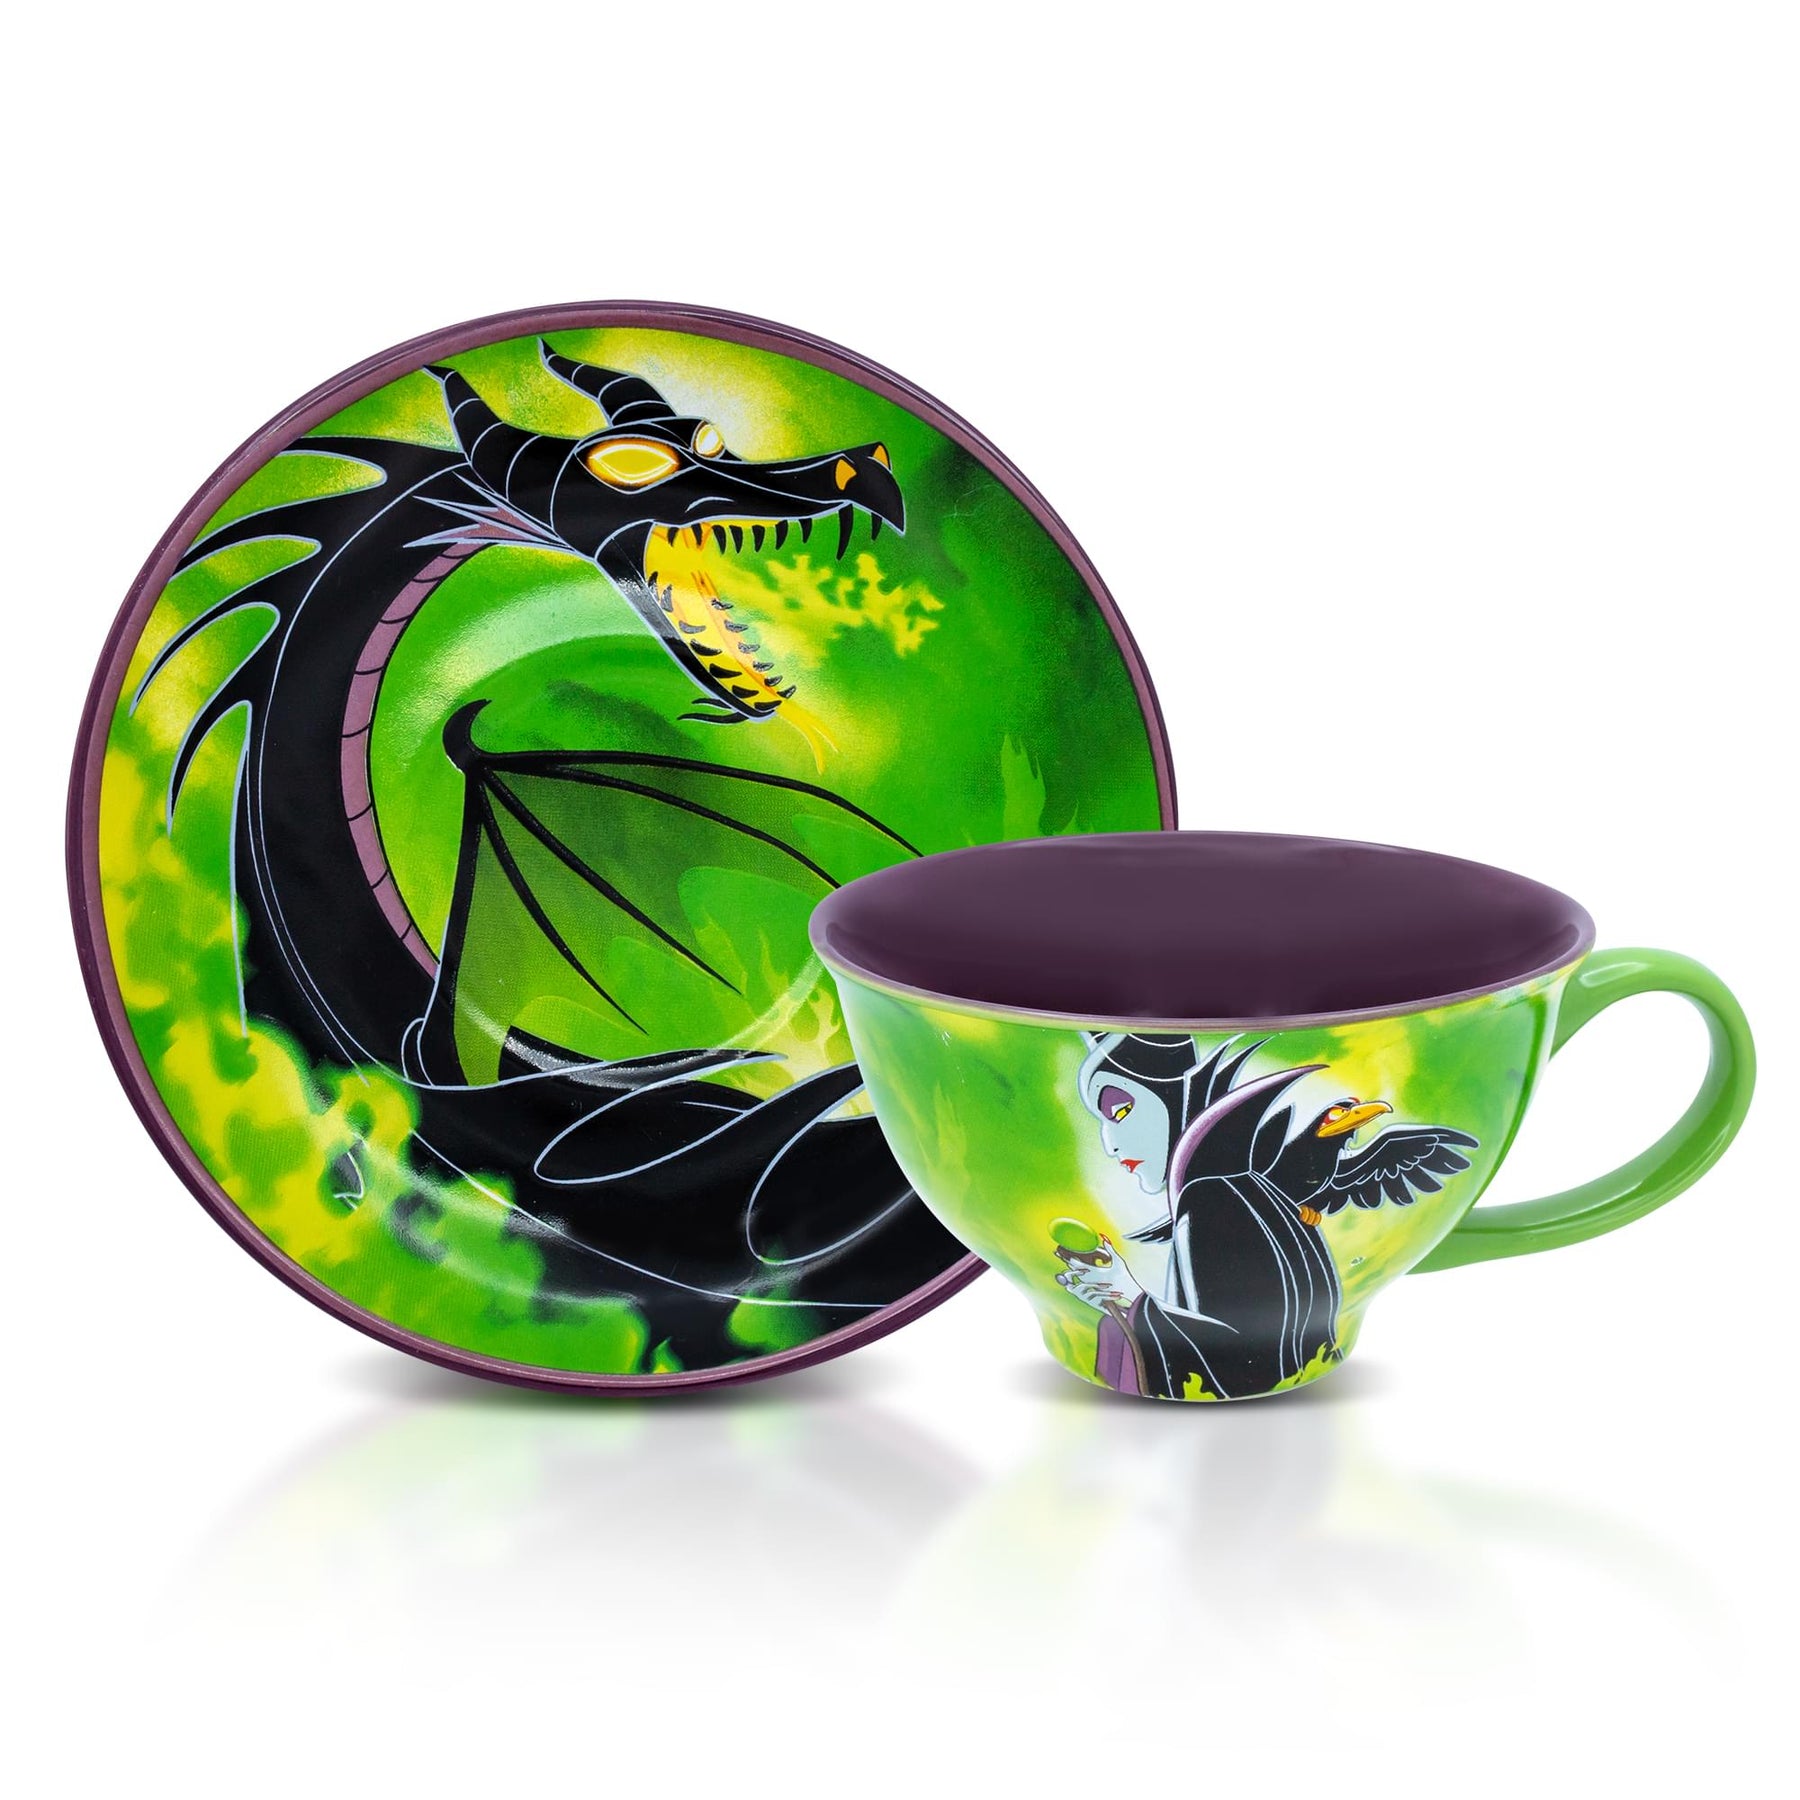 Disney Villains Maleficent Ceramic Teacup and Saucer Set